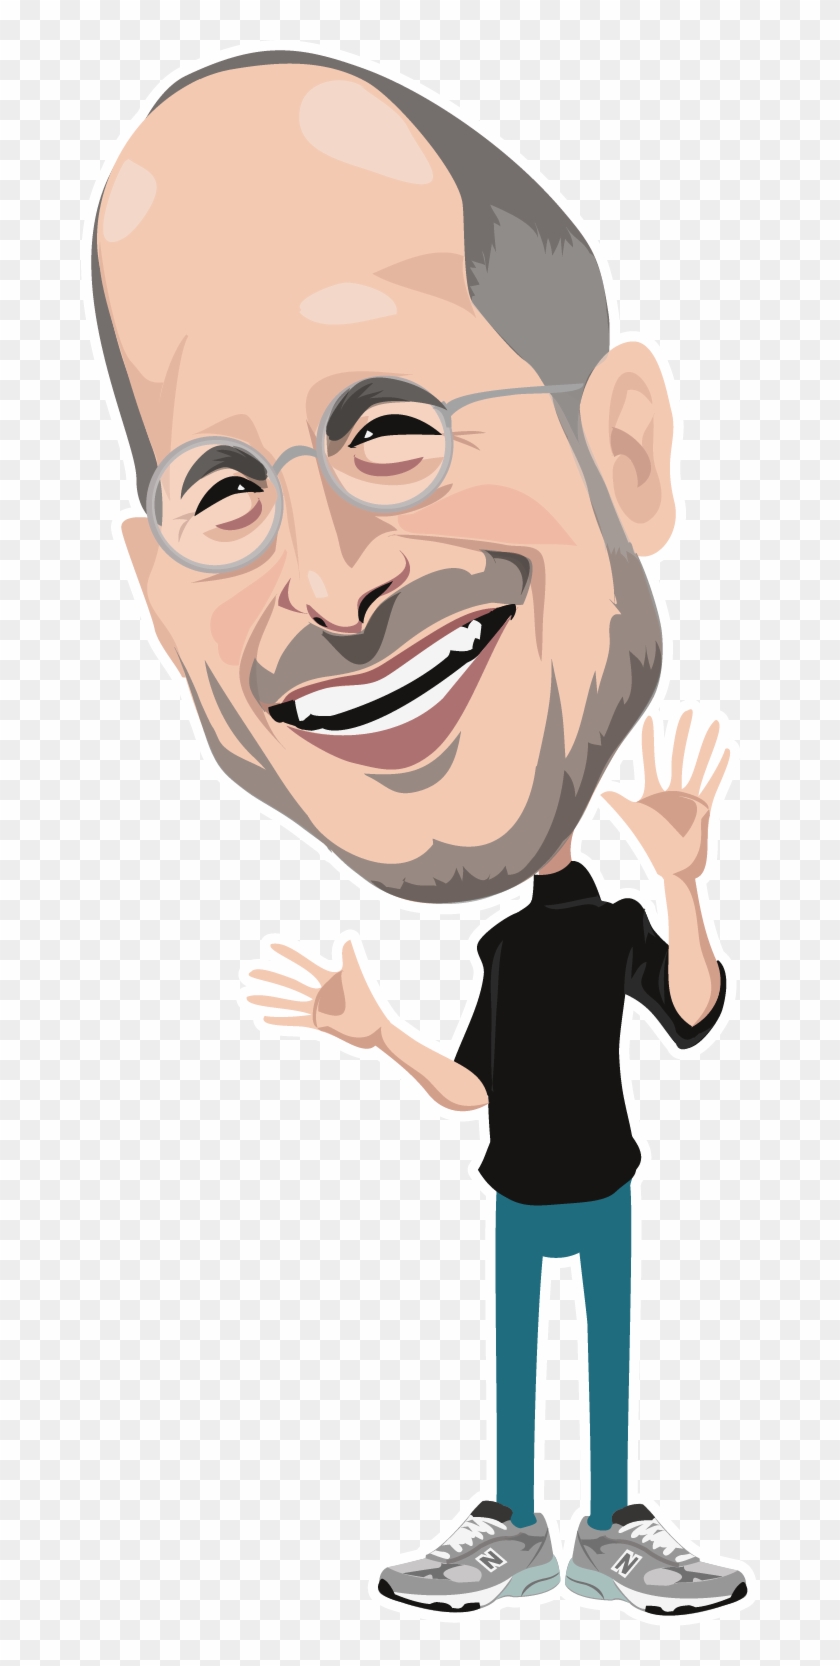 Steve Jobs Apple Cartoon Facial Expression Clip Art - Steve Jobs Png #803713